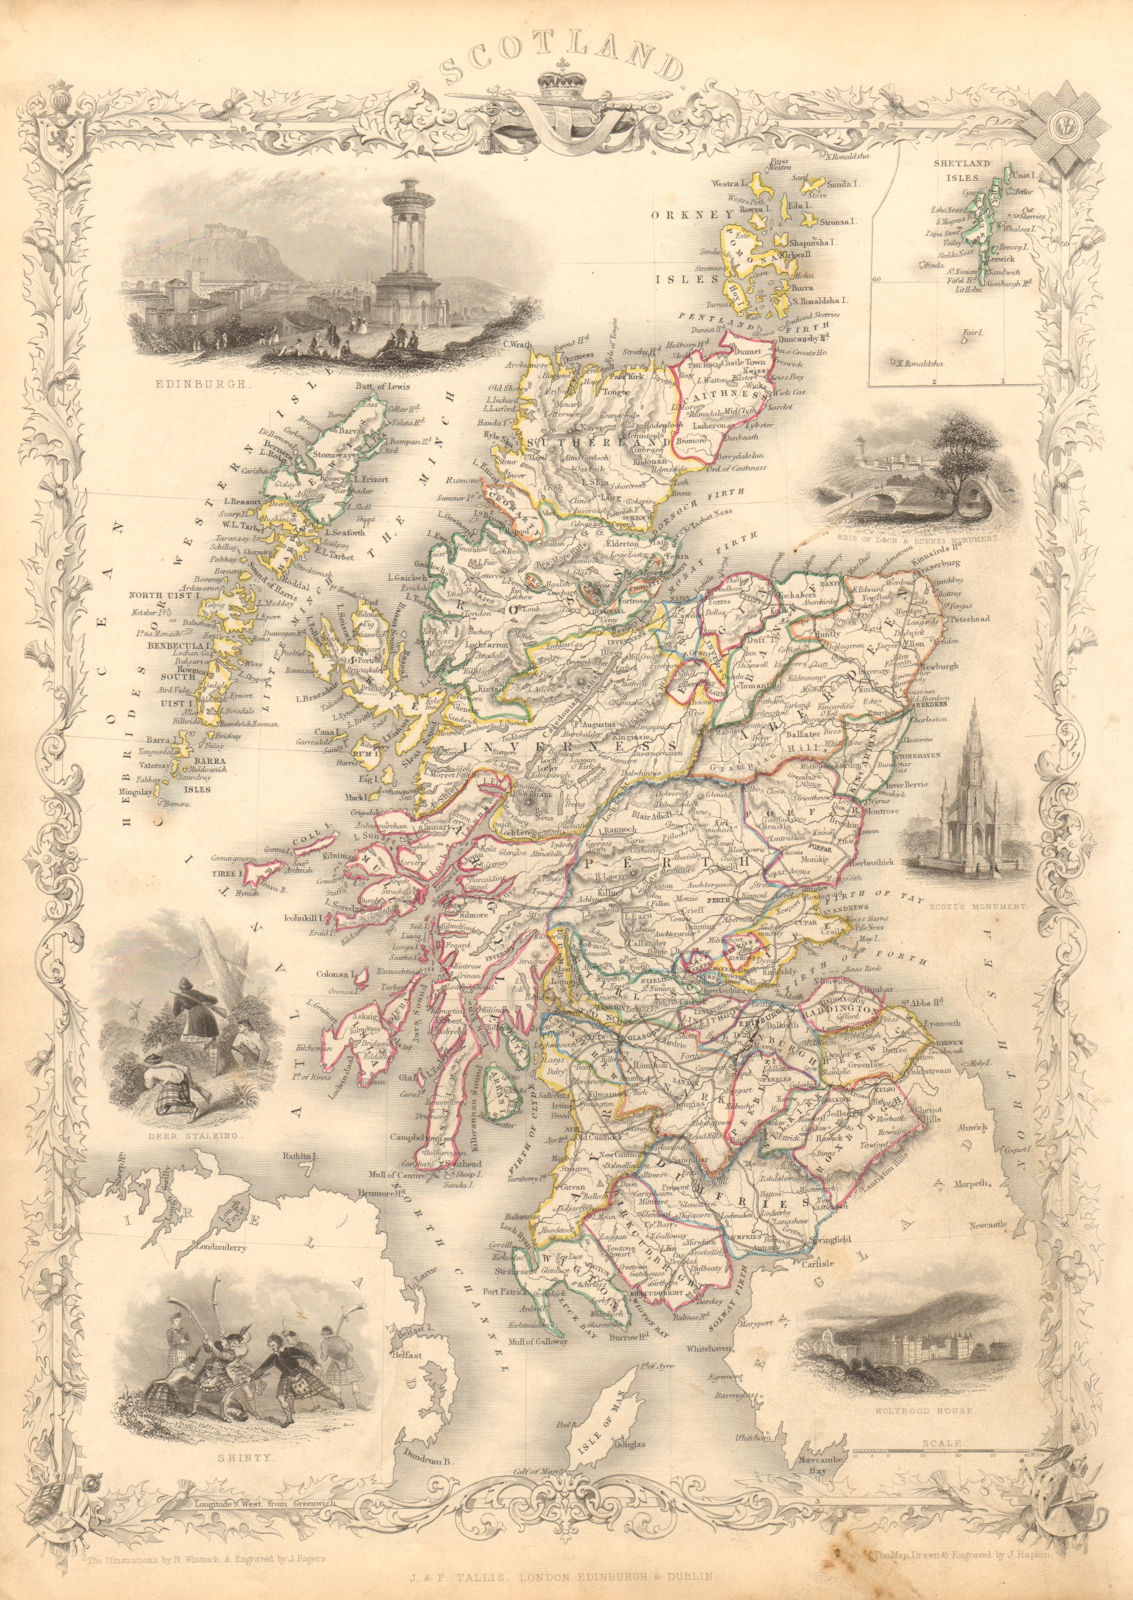 SCOTLAND. Edinburgh Shinty & Holyrood views. Counties. TALLIS & RAPKIN 1851 map